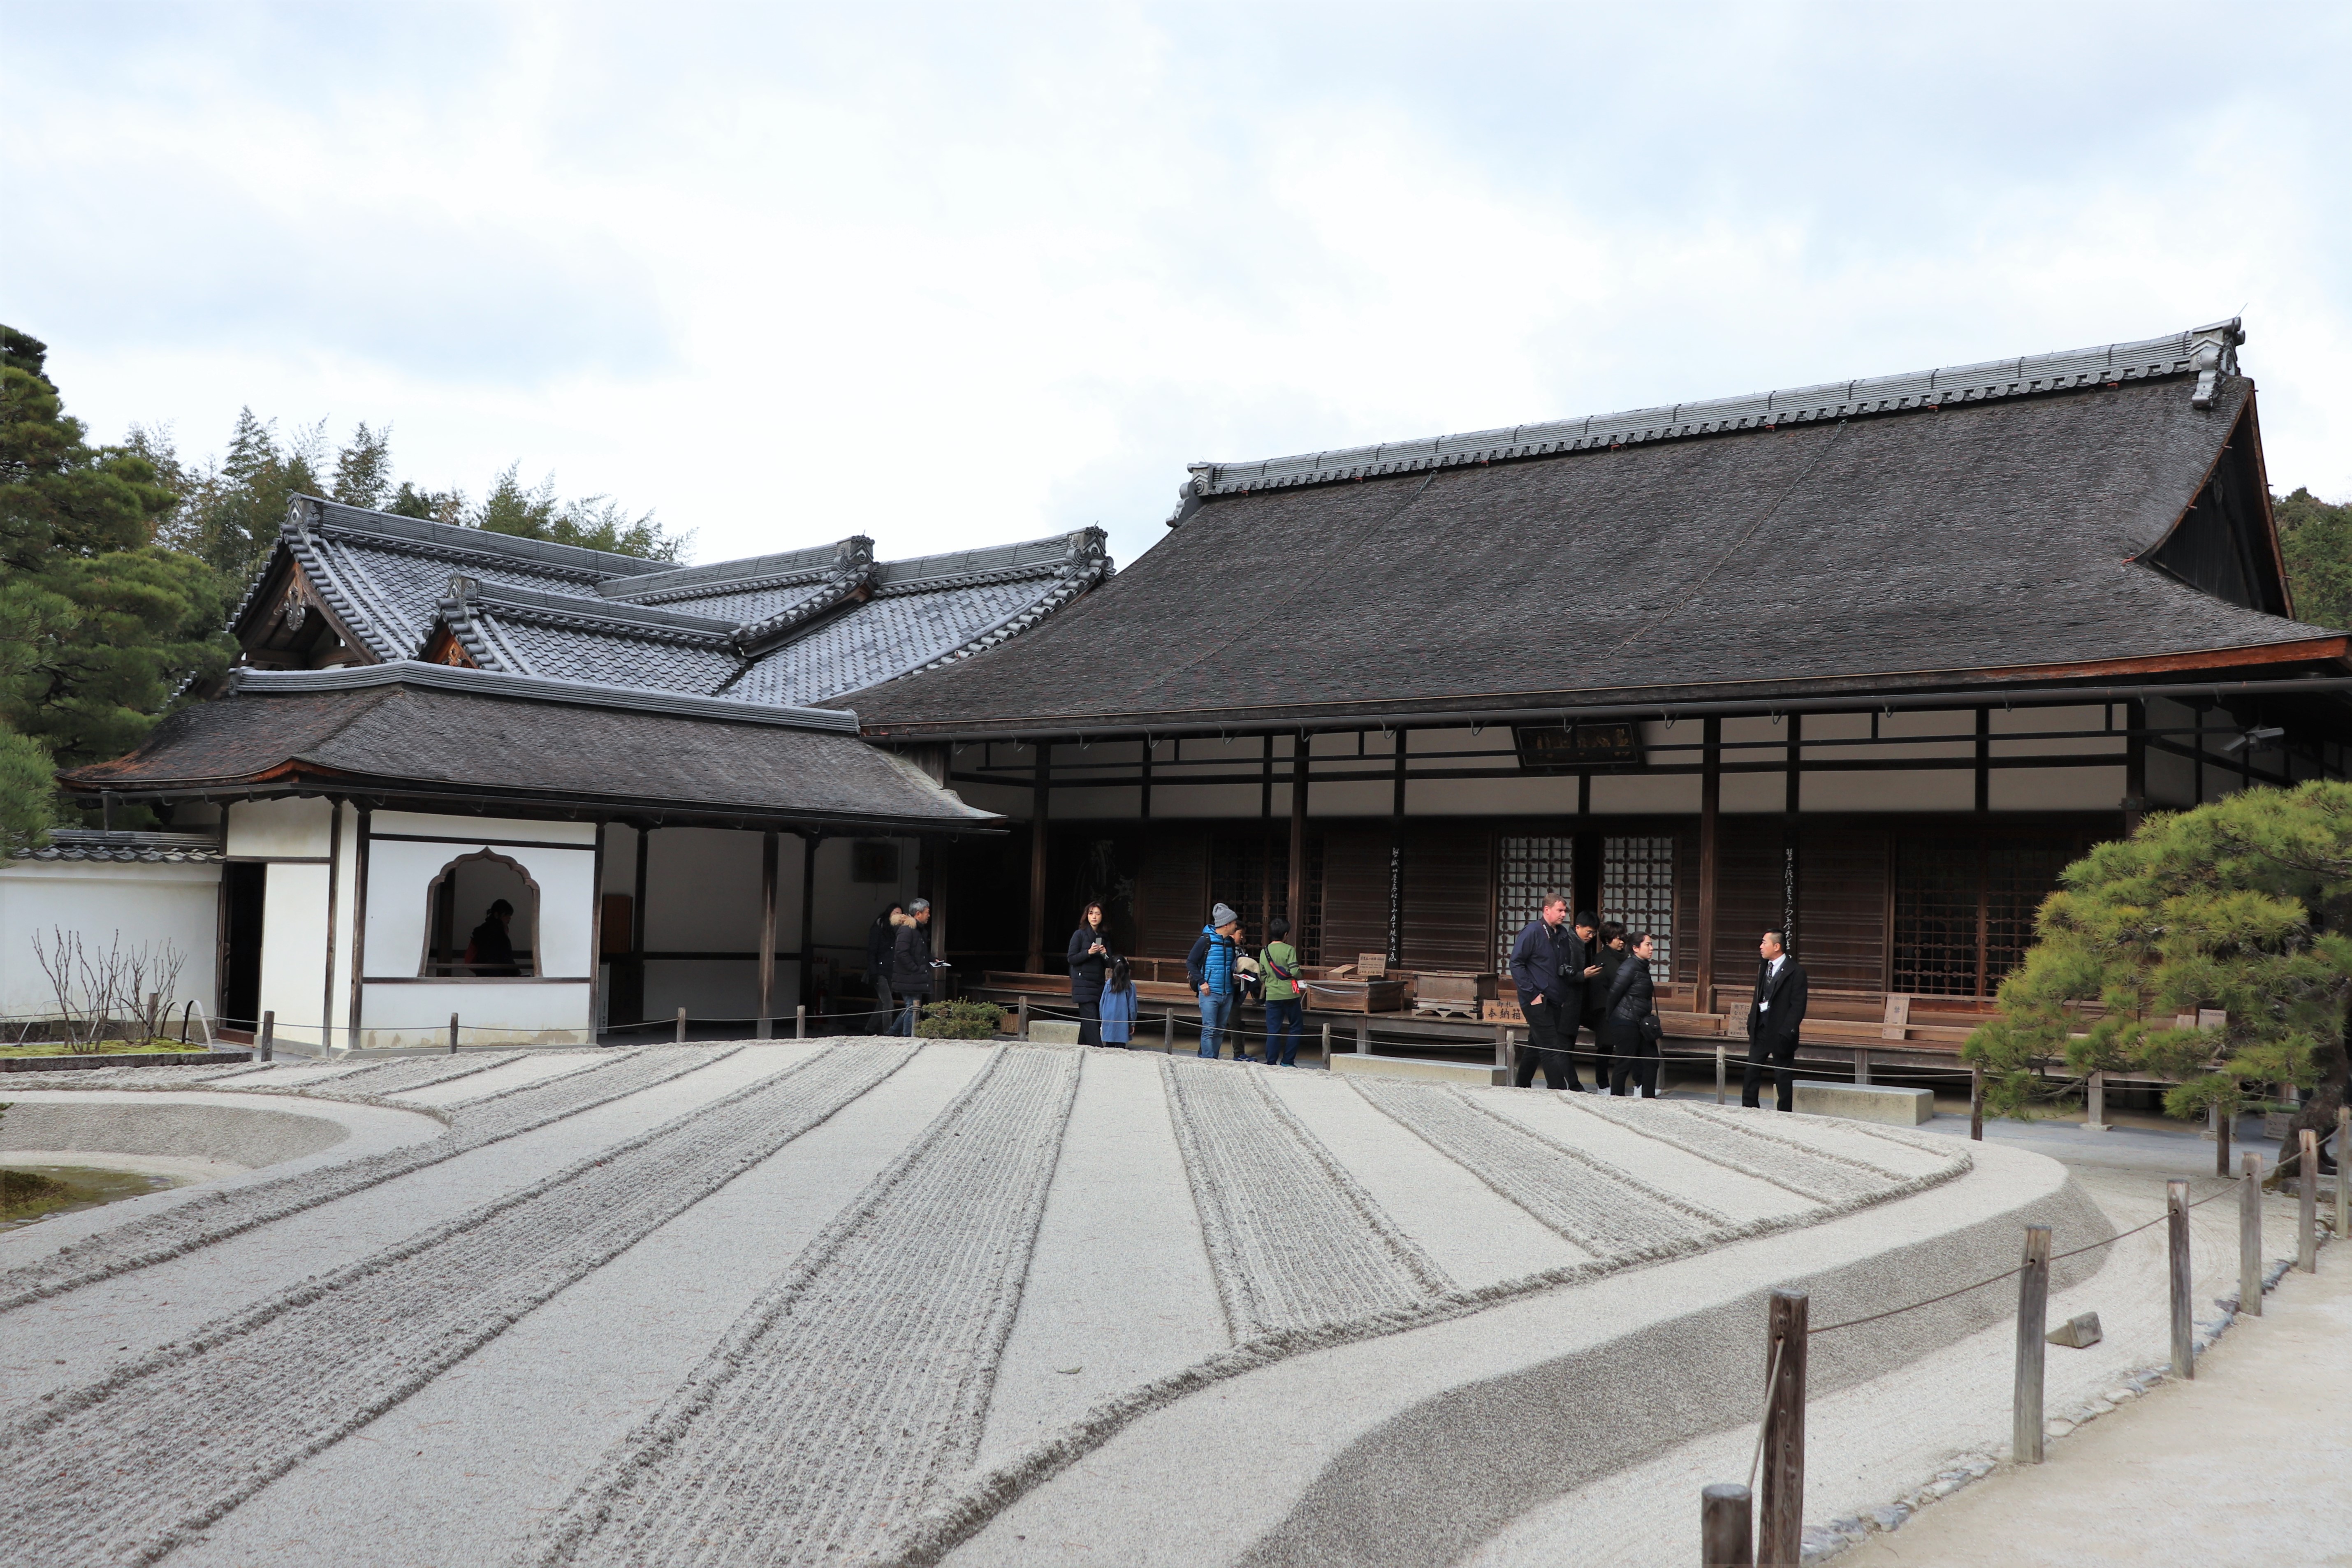 Ginshadai rock garden in the ginkaku-ji temple in kyoto